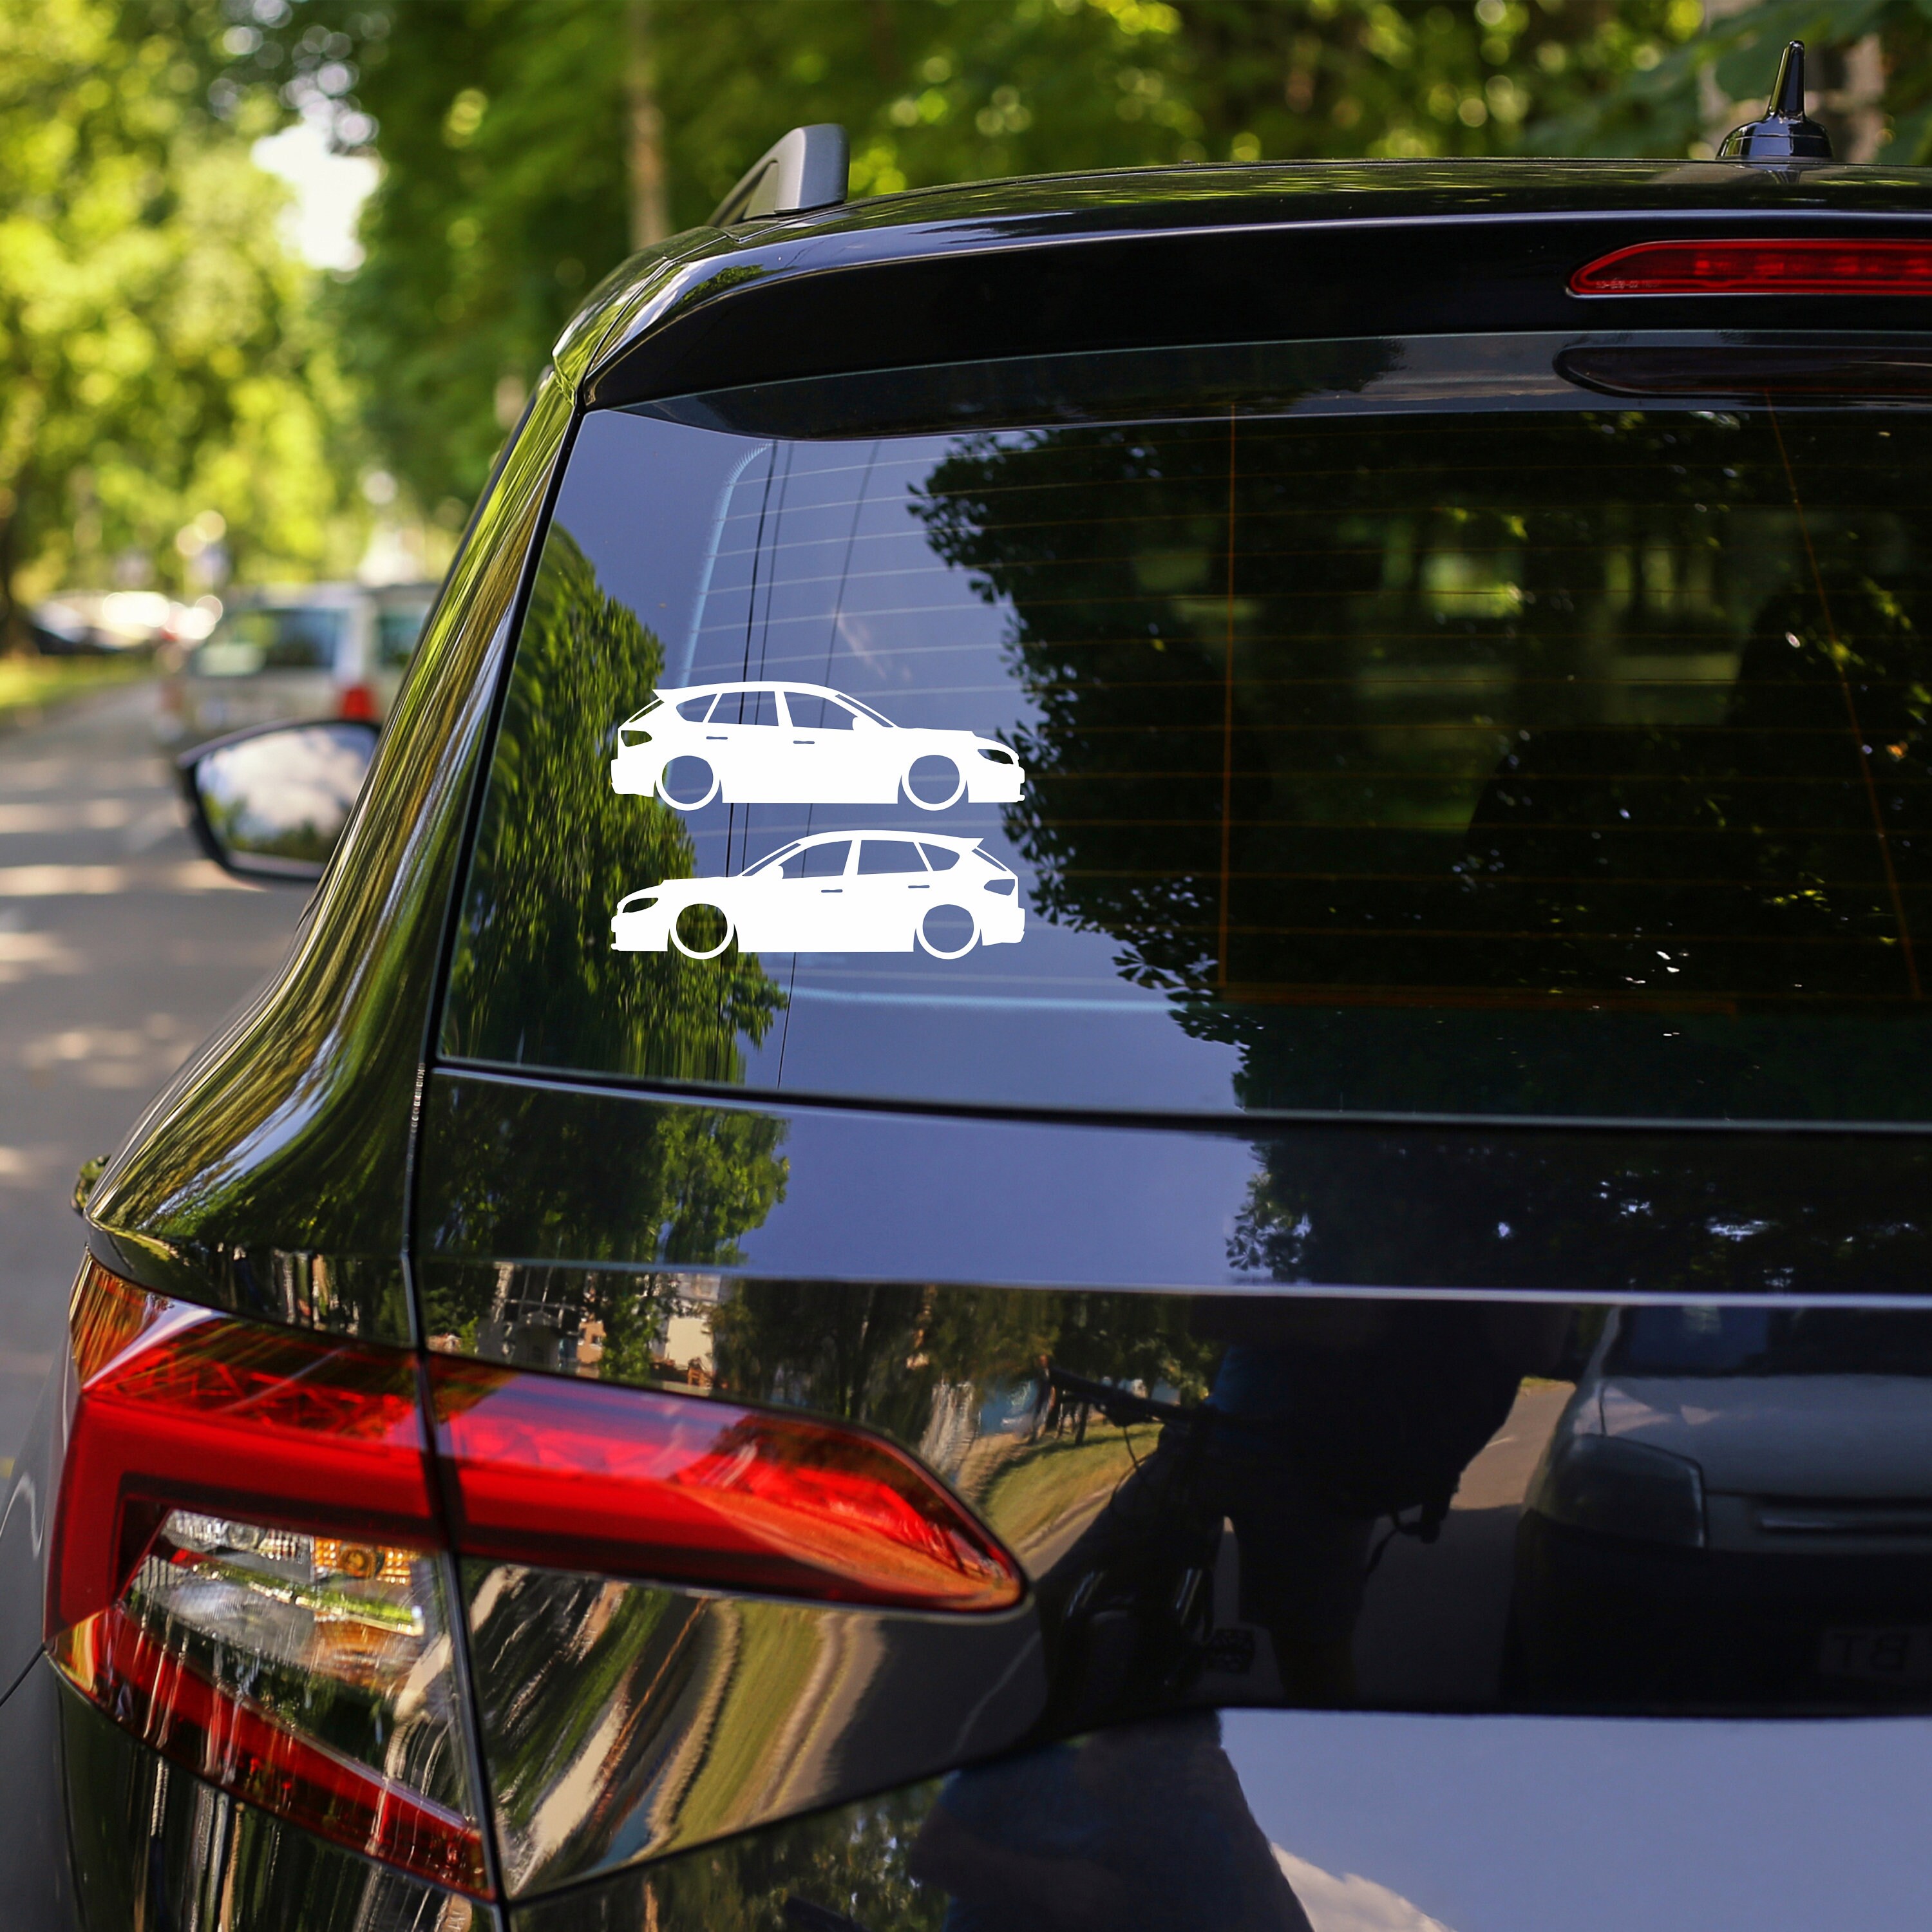 2x Lowered Car Silhouette Decal Stickers for Subaru Impreza WRX STI  Hatchback GH 3rd Gen 